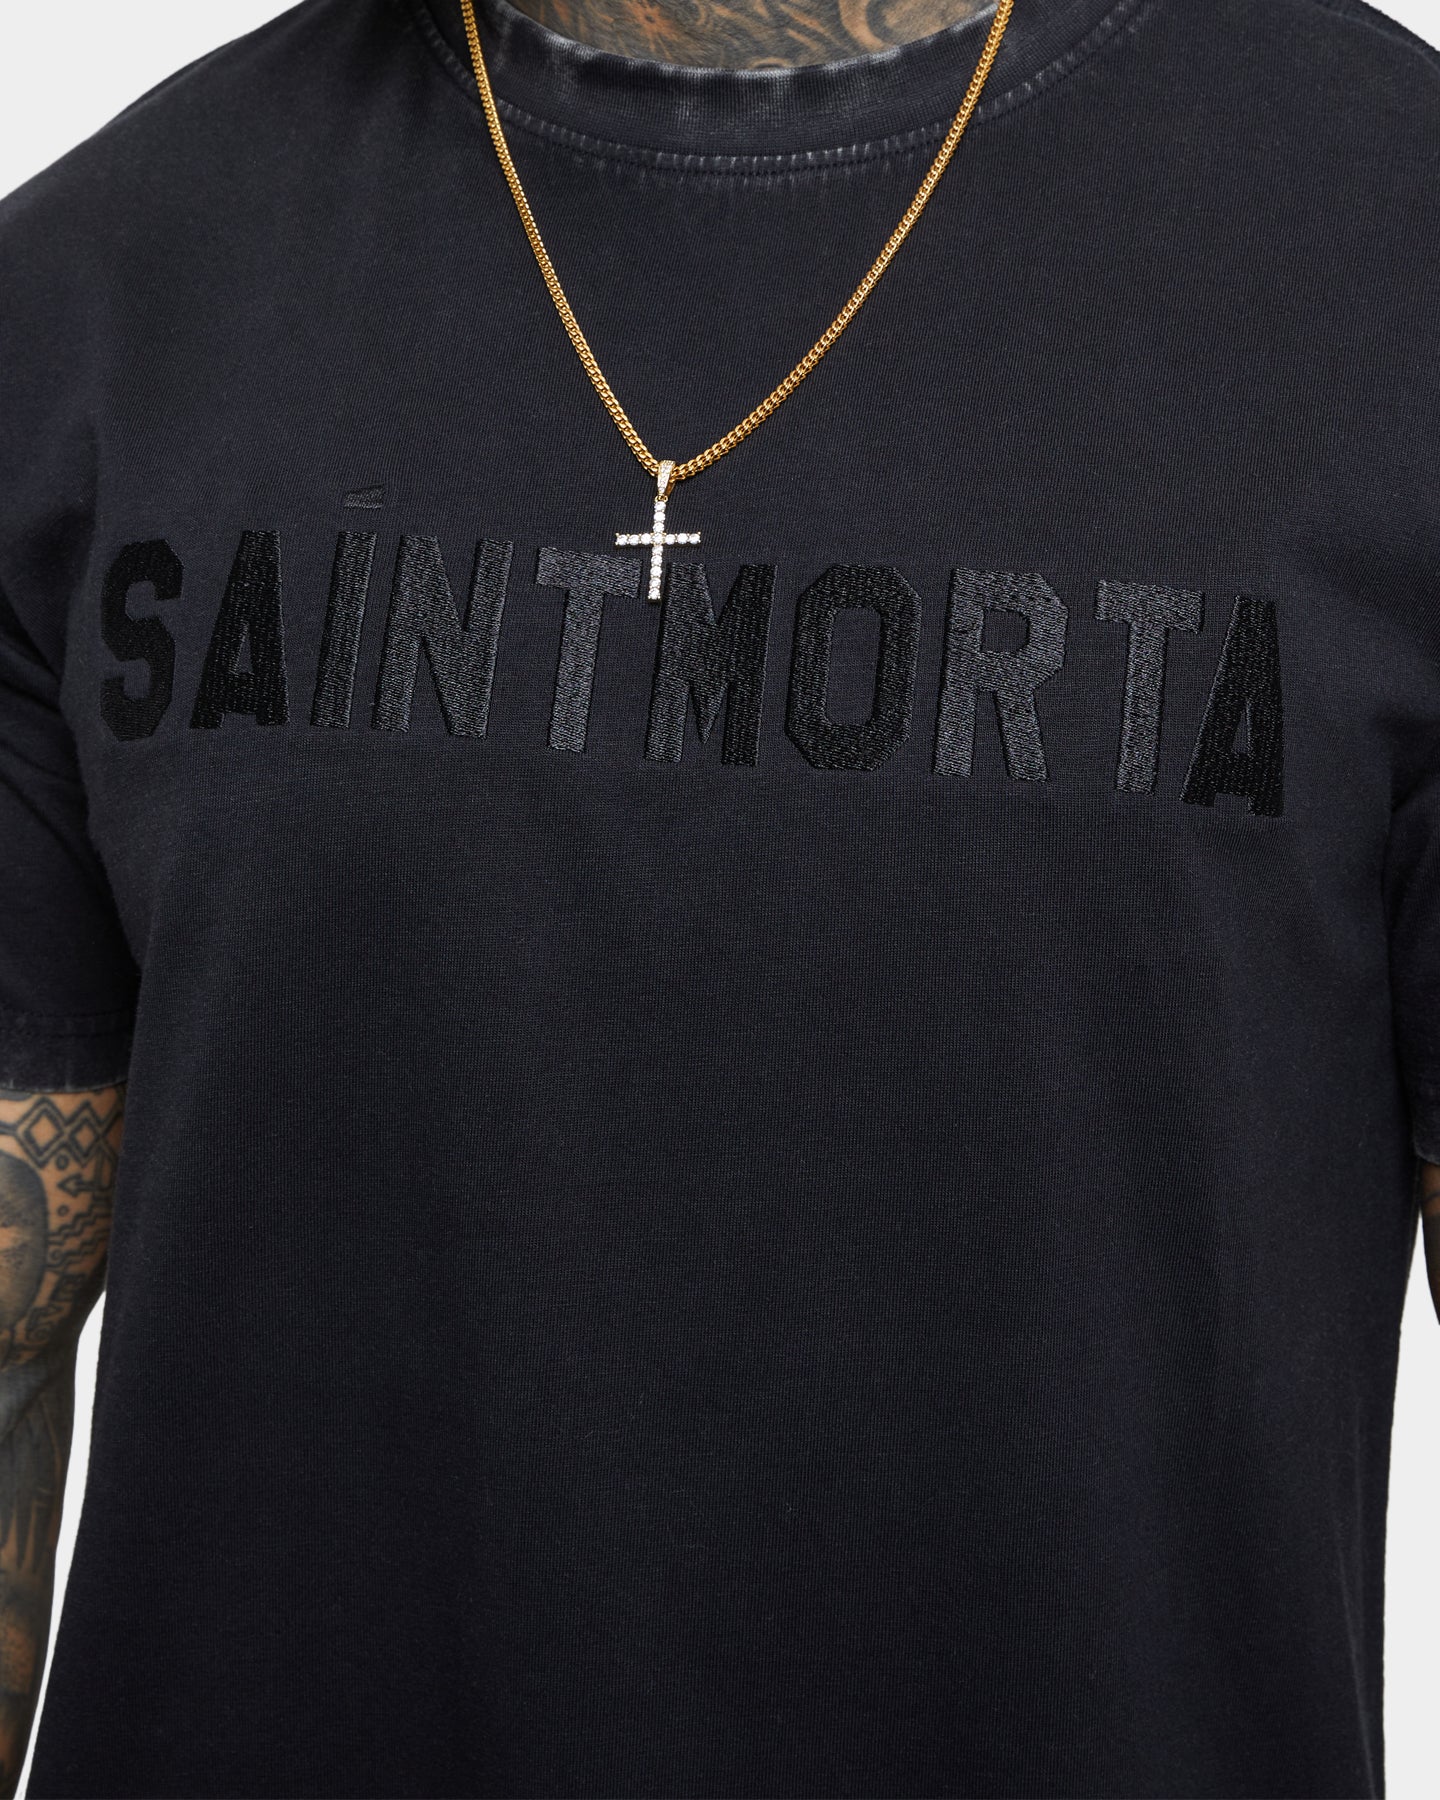 Saint Morta Yearbook Lafayette T-Shirt Vintage Black